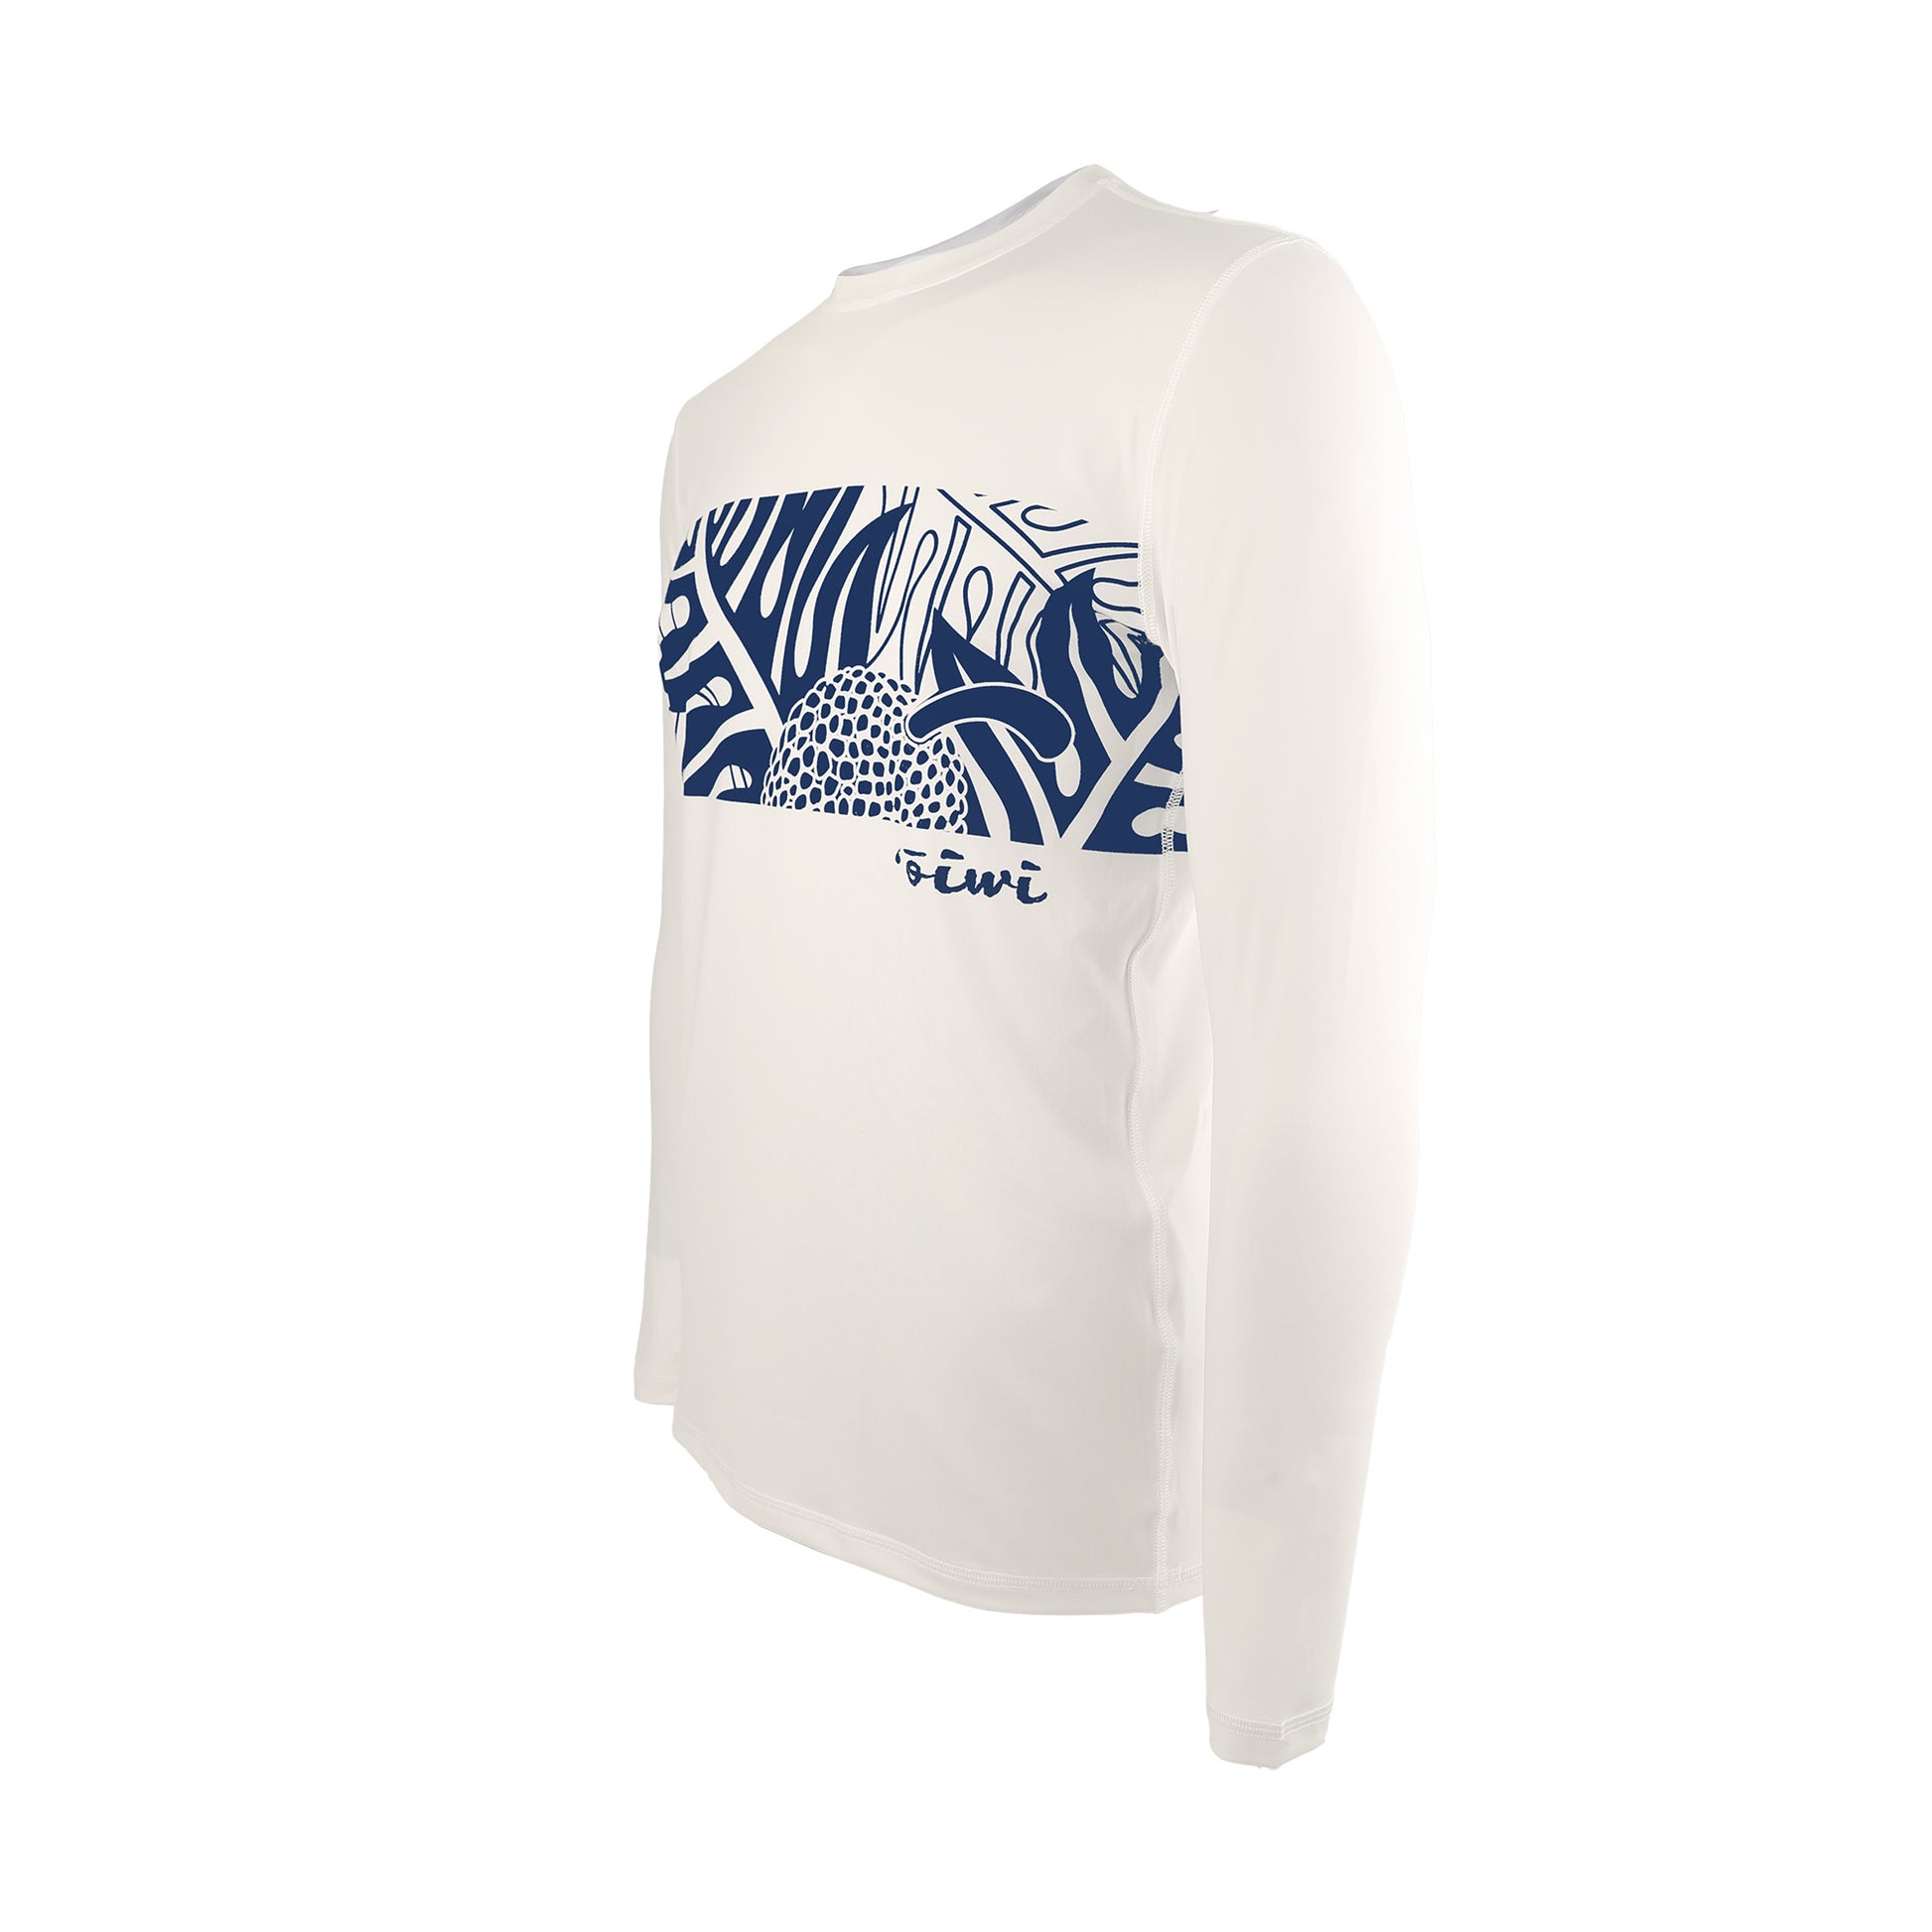 Ulu Long Sleeve UPF 30 Shirt in White/Navy - Oiwi